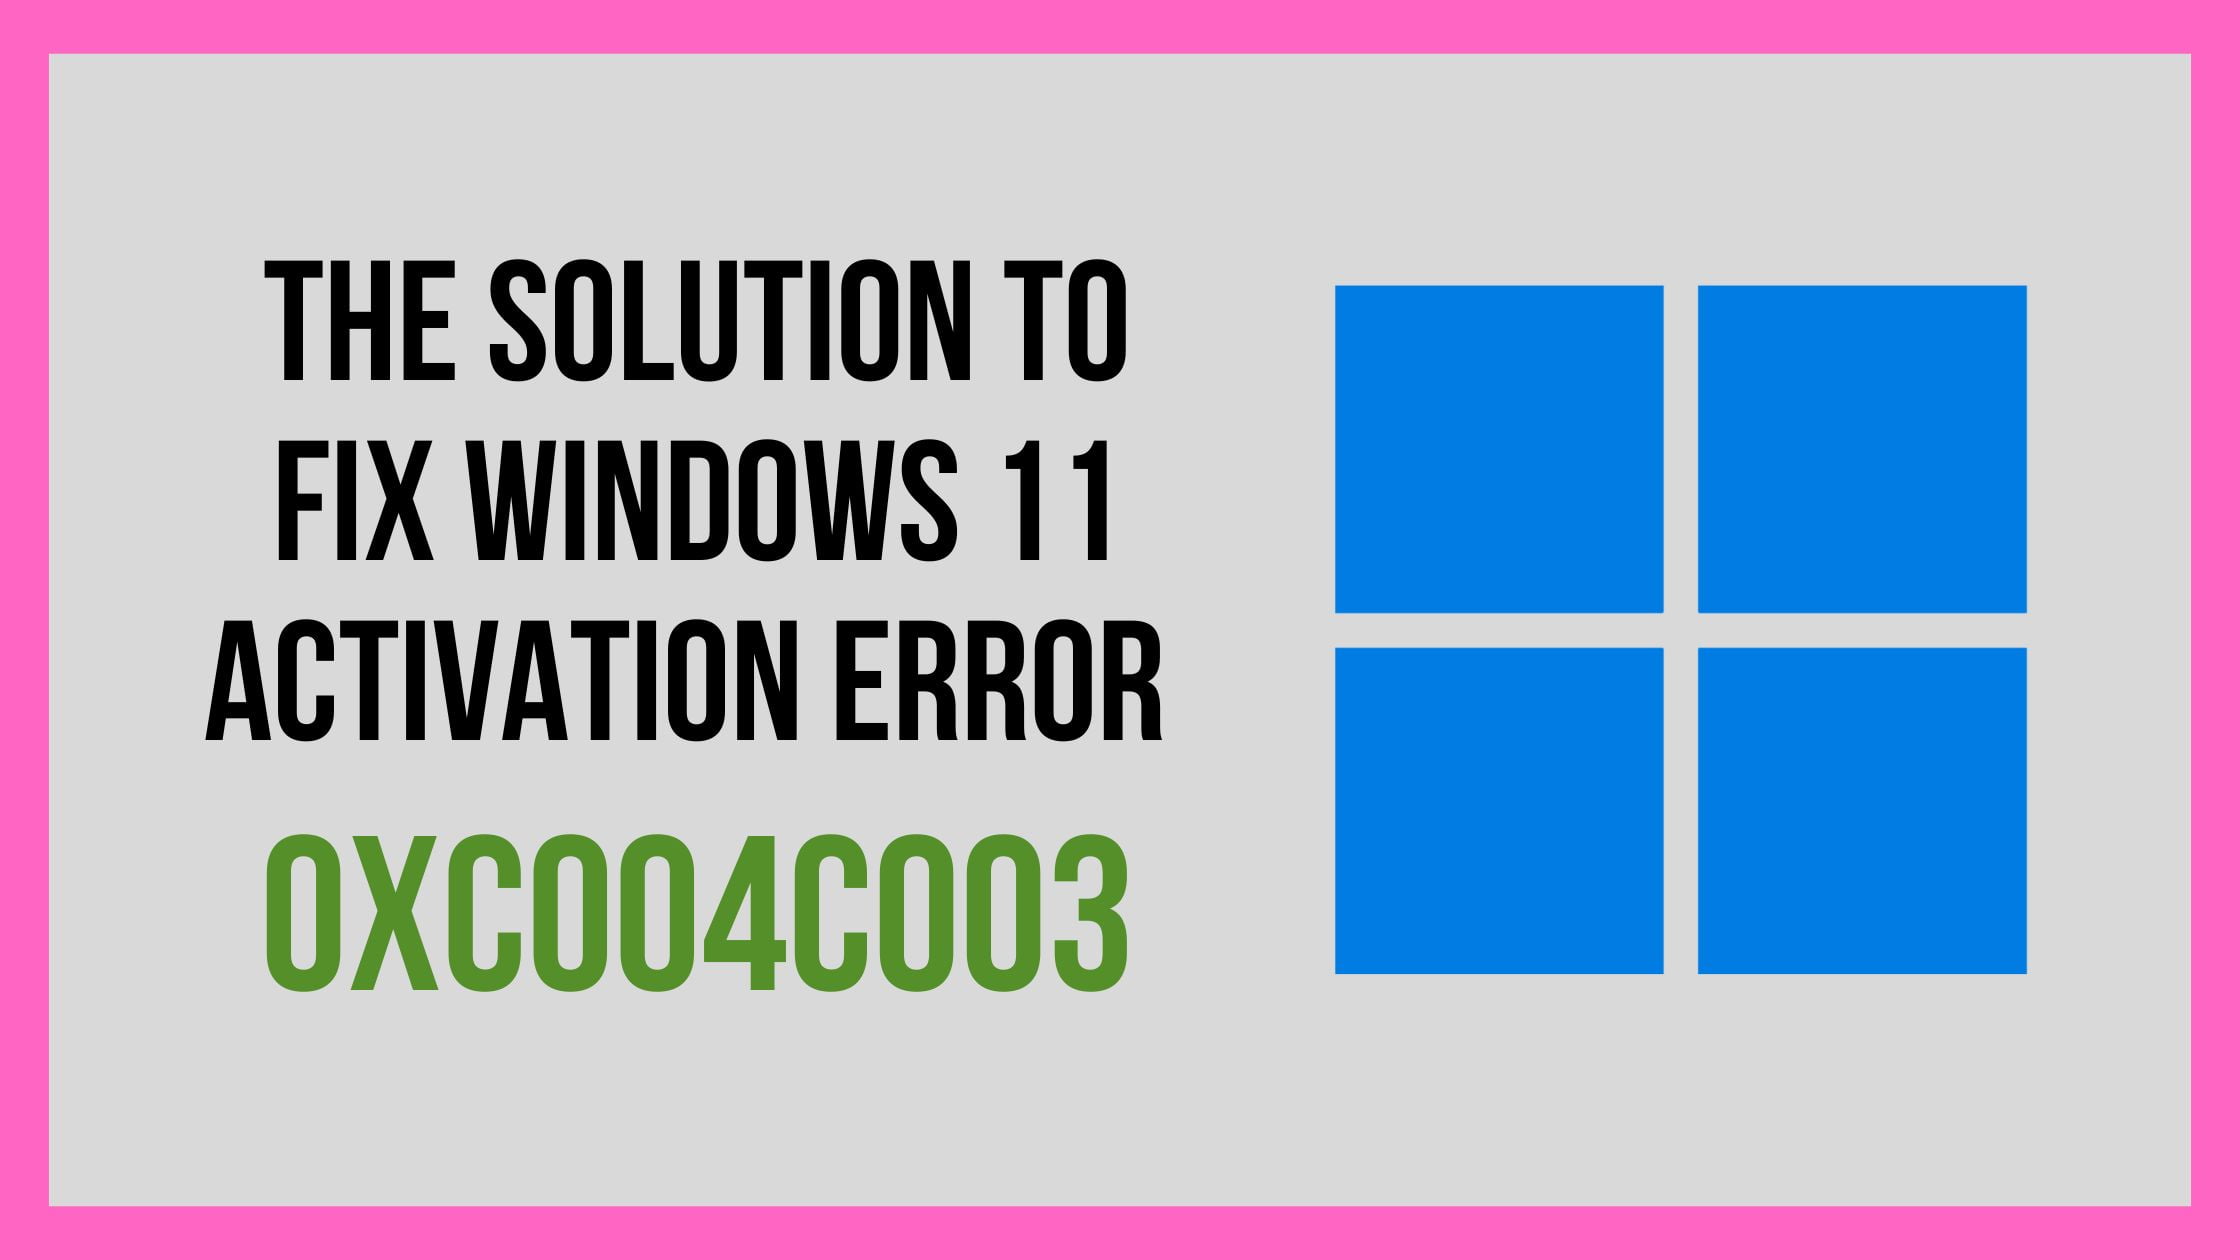 Solution to Fix Windows 11 Activation Error 0xC004C003